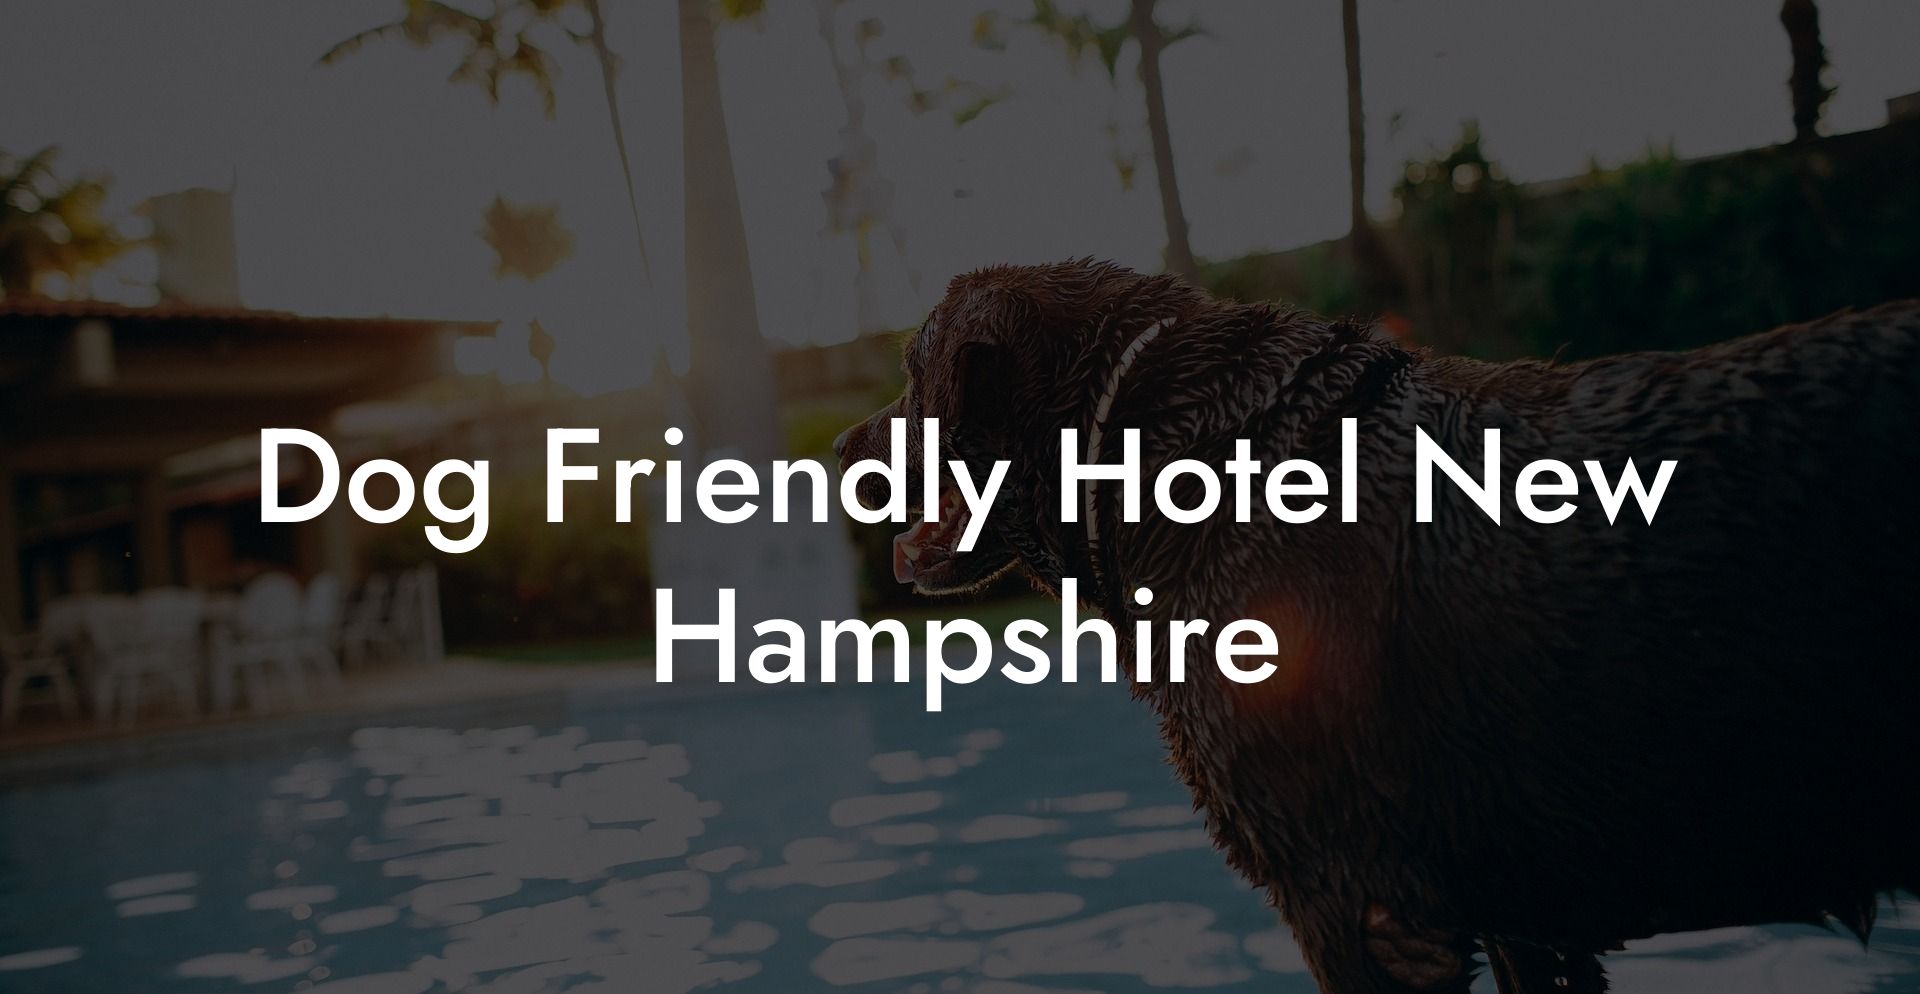 Dog Friendly Hotel New Hampshire